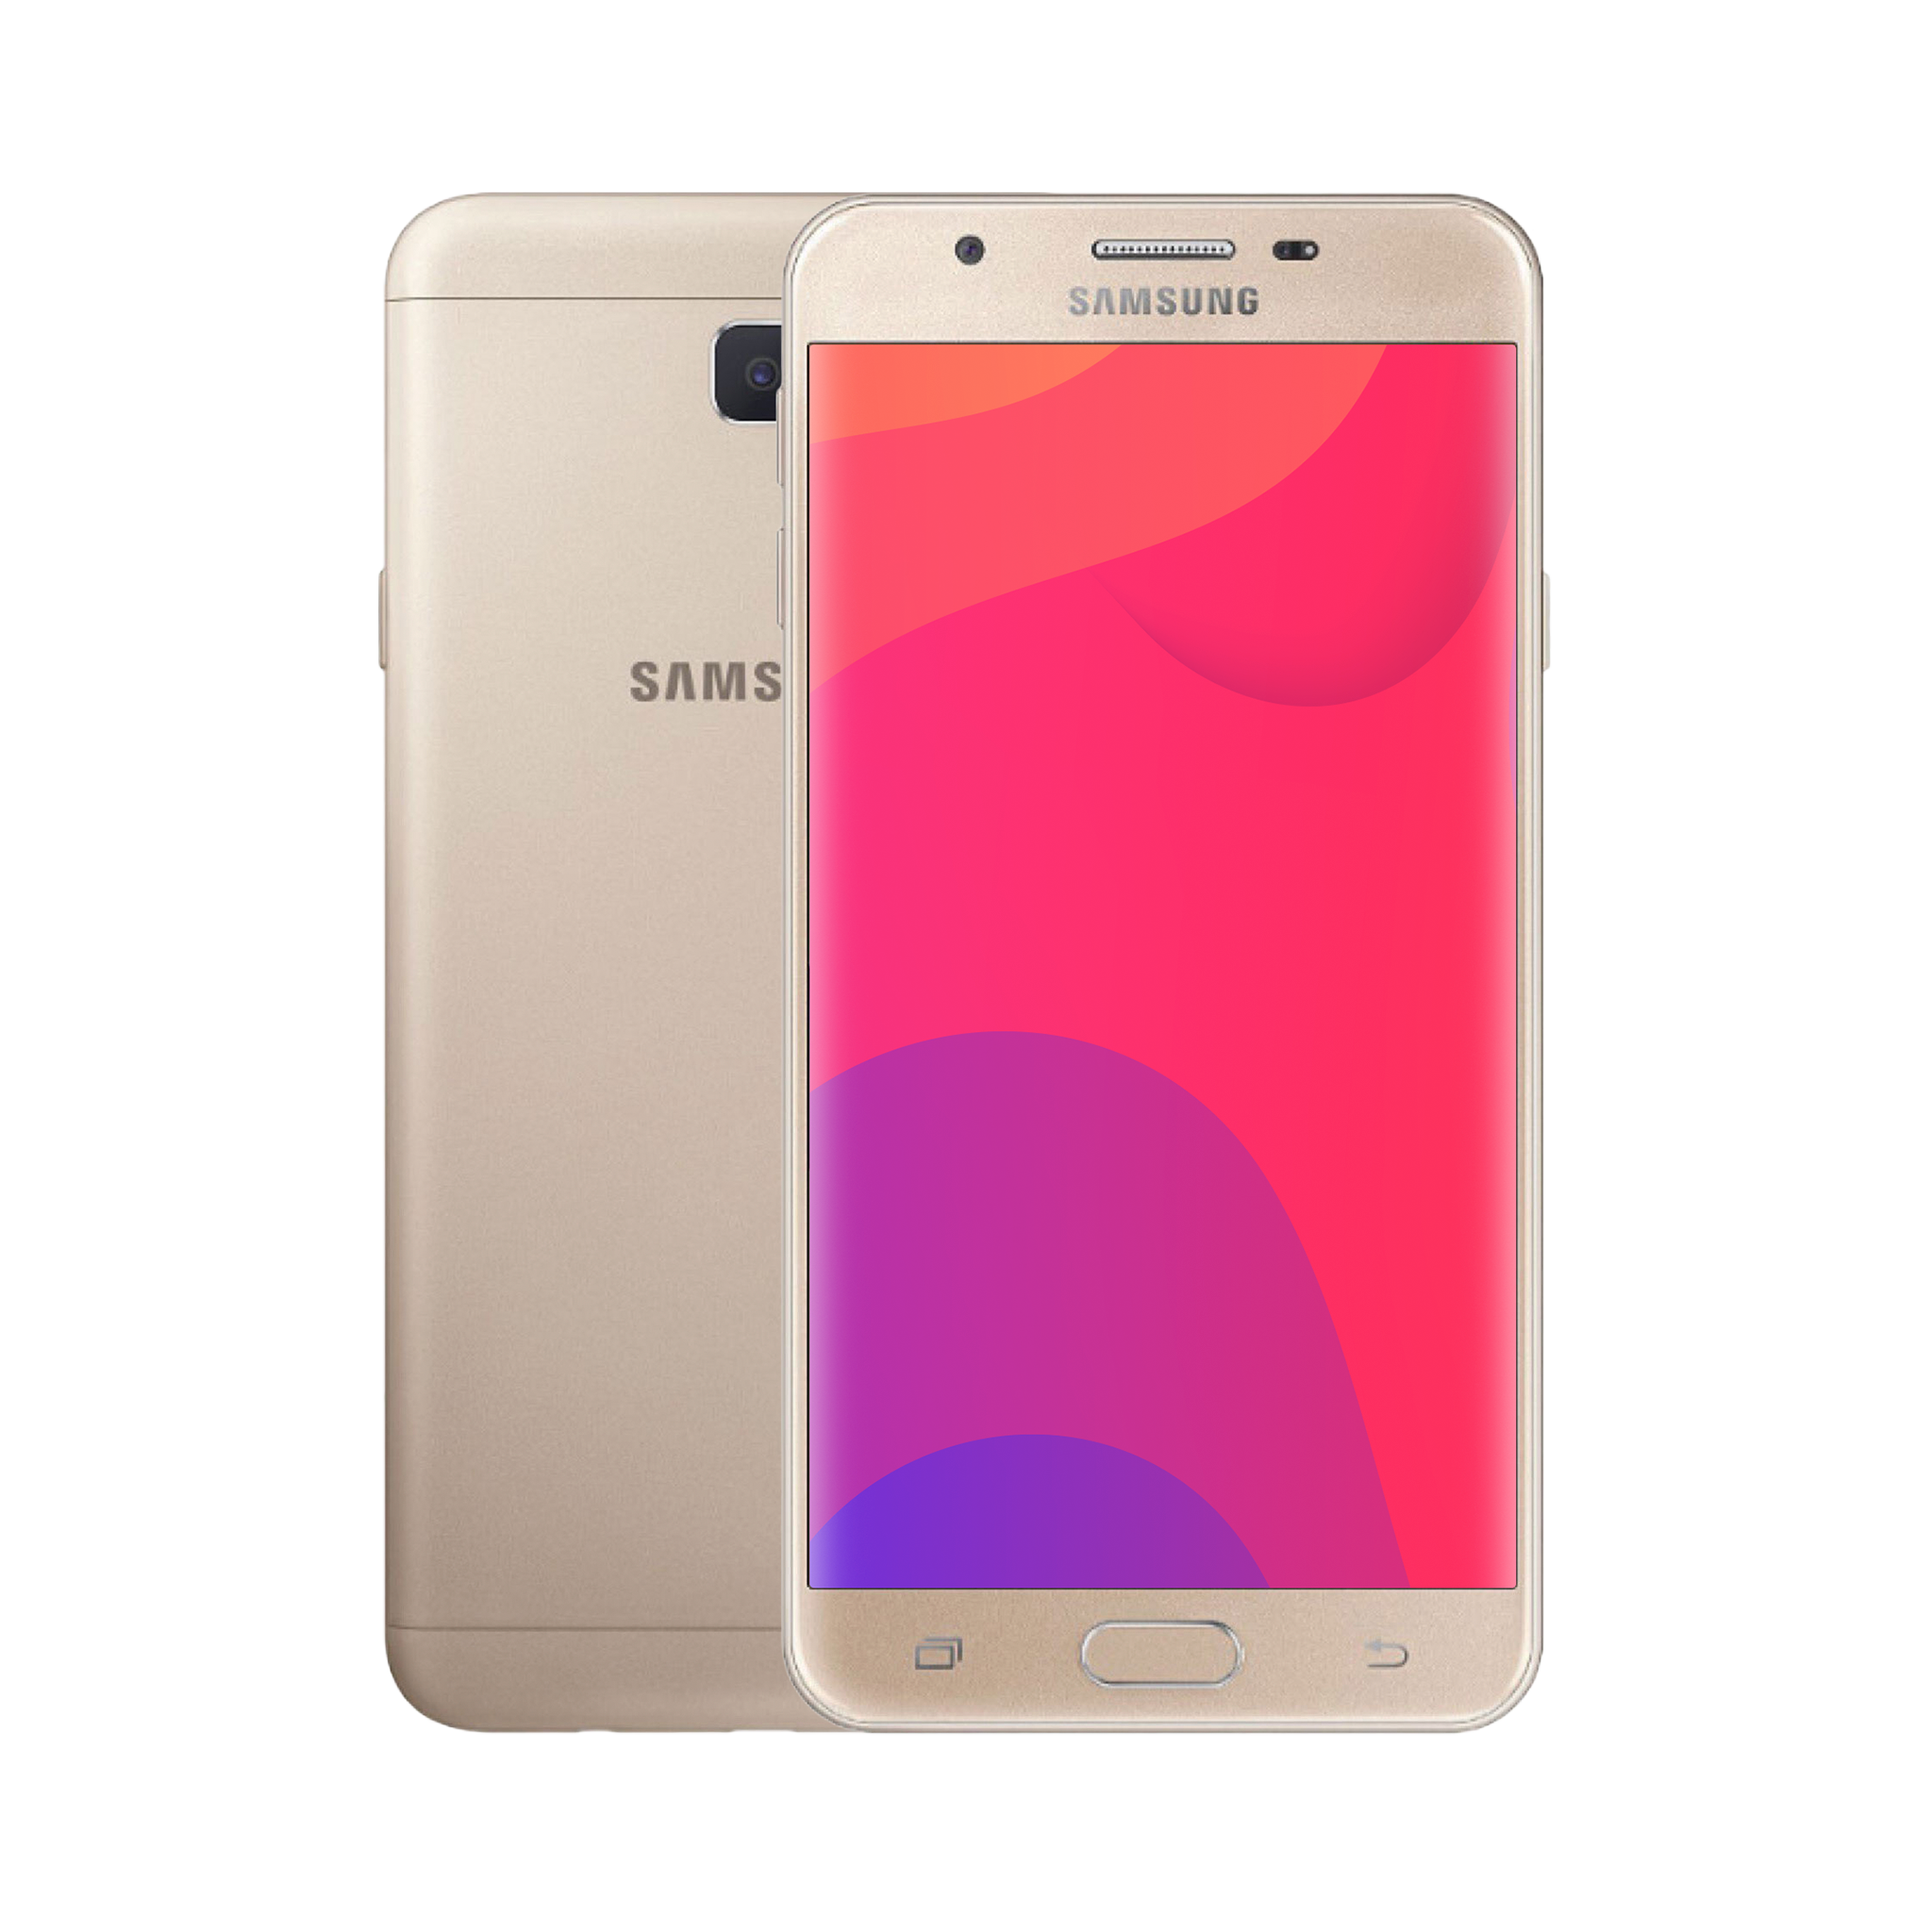 Samsung Galaxy J5 Prime 16GB Gold